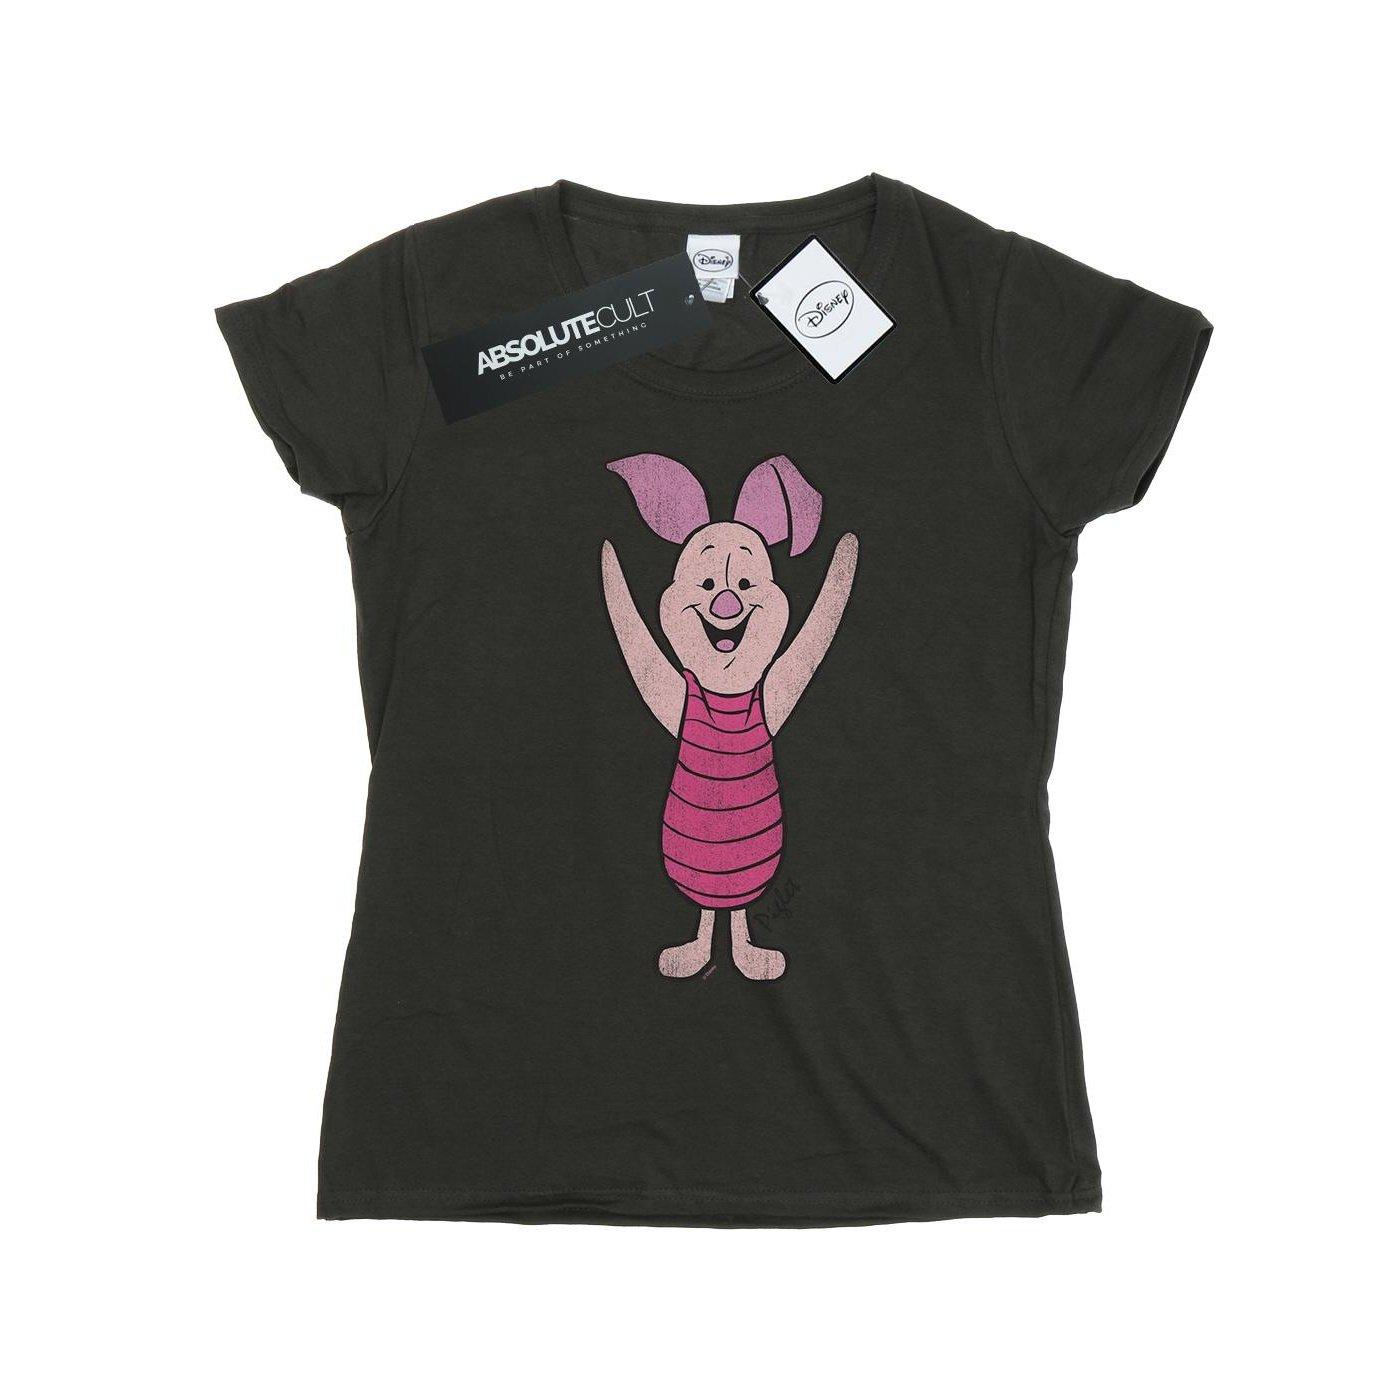 Tshirt Damen Taubengrau XL von Winnie the Pooh